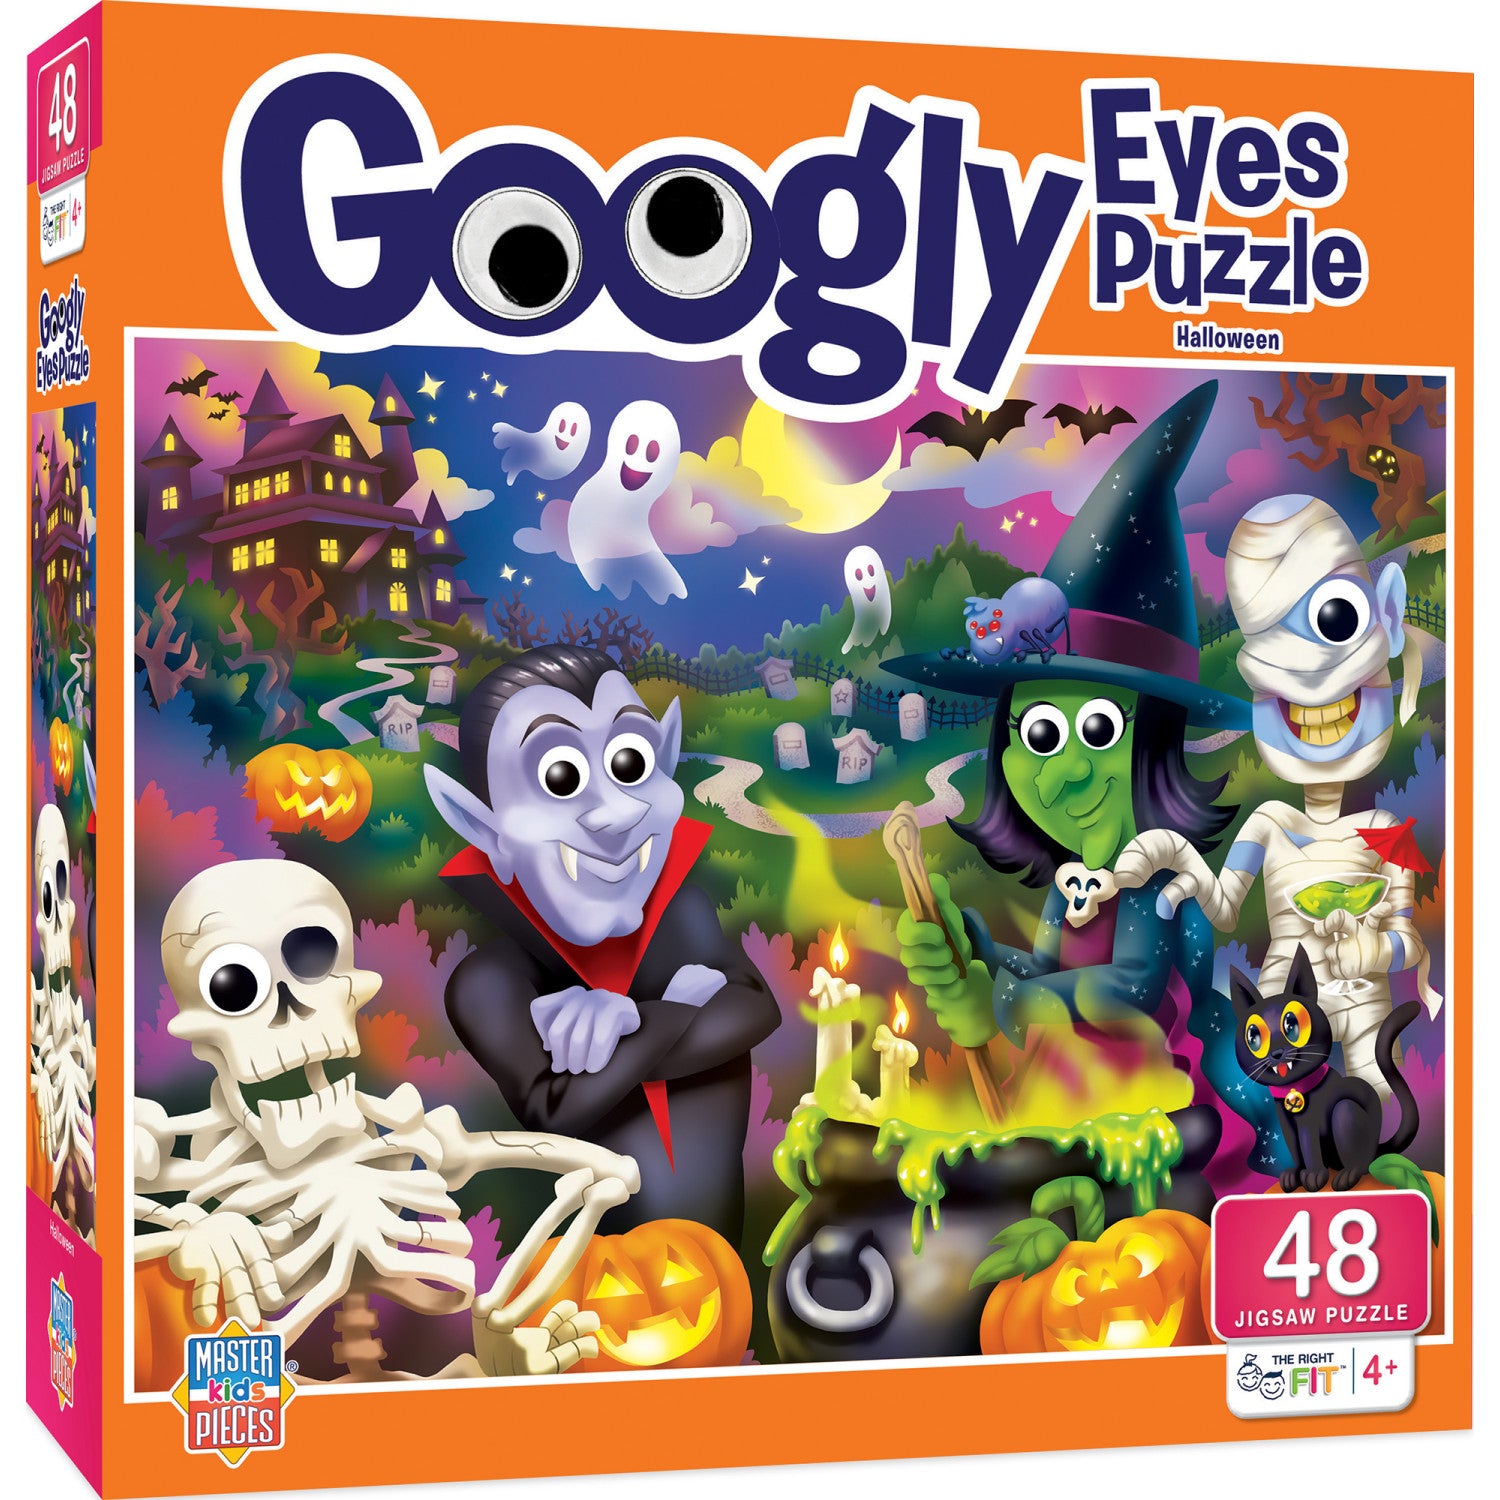 Googly Eyes - Freaky Friends 48 Piece Jigsaw Puzzle